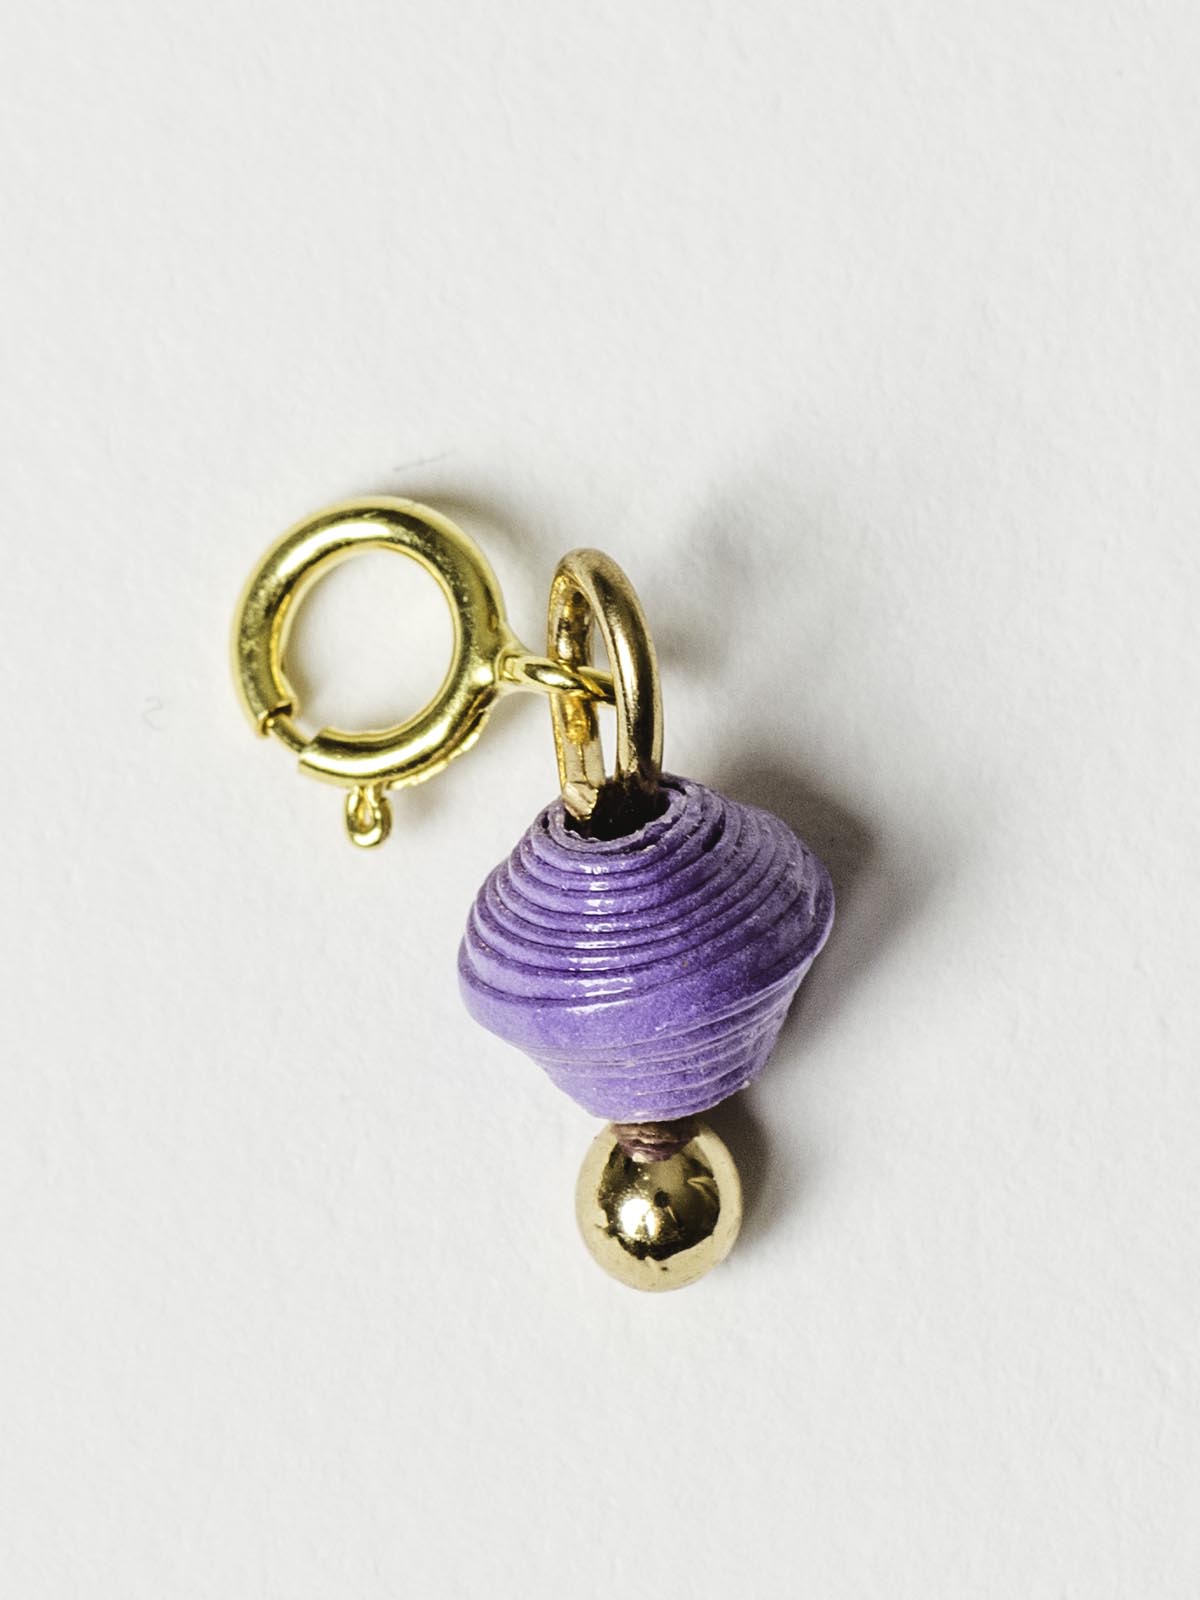 Purple bead charm on gold clasp. 